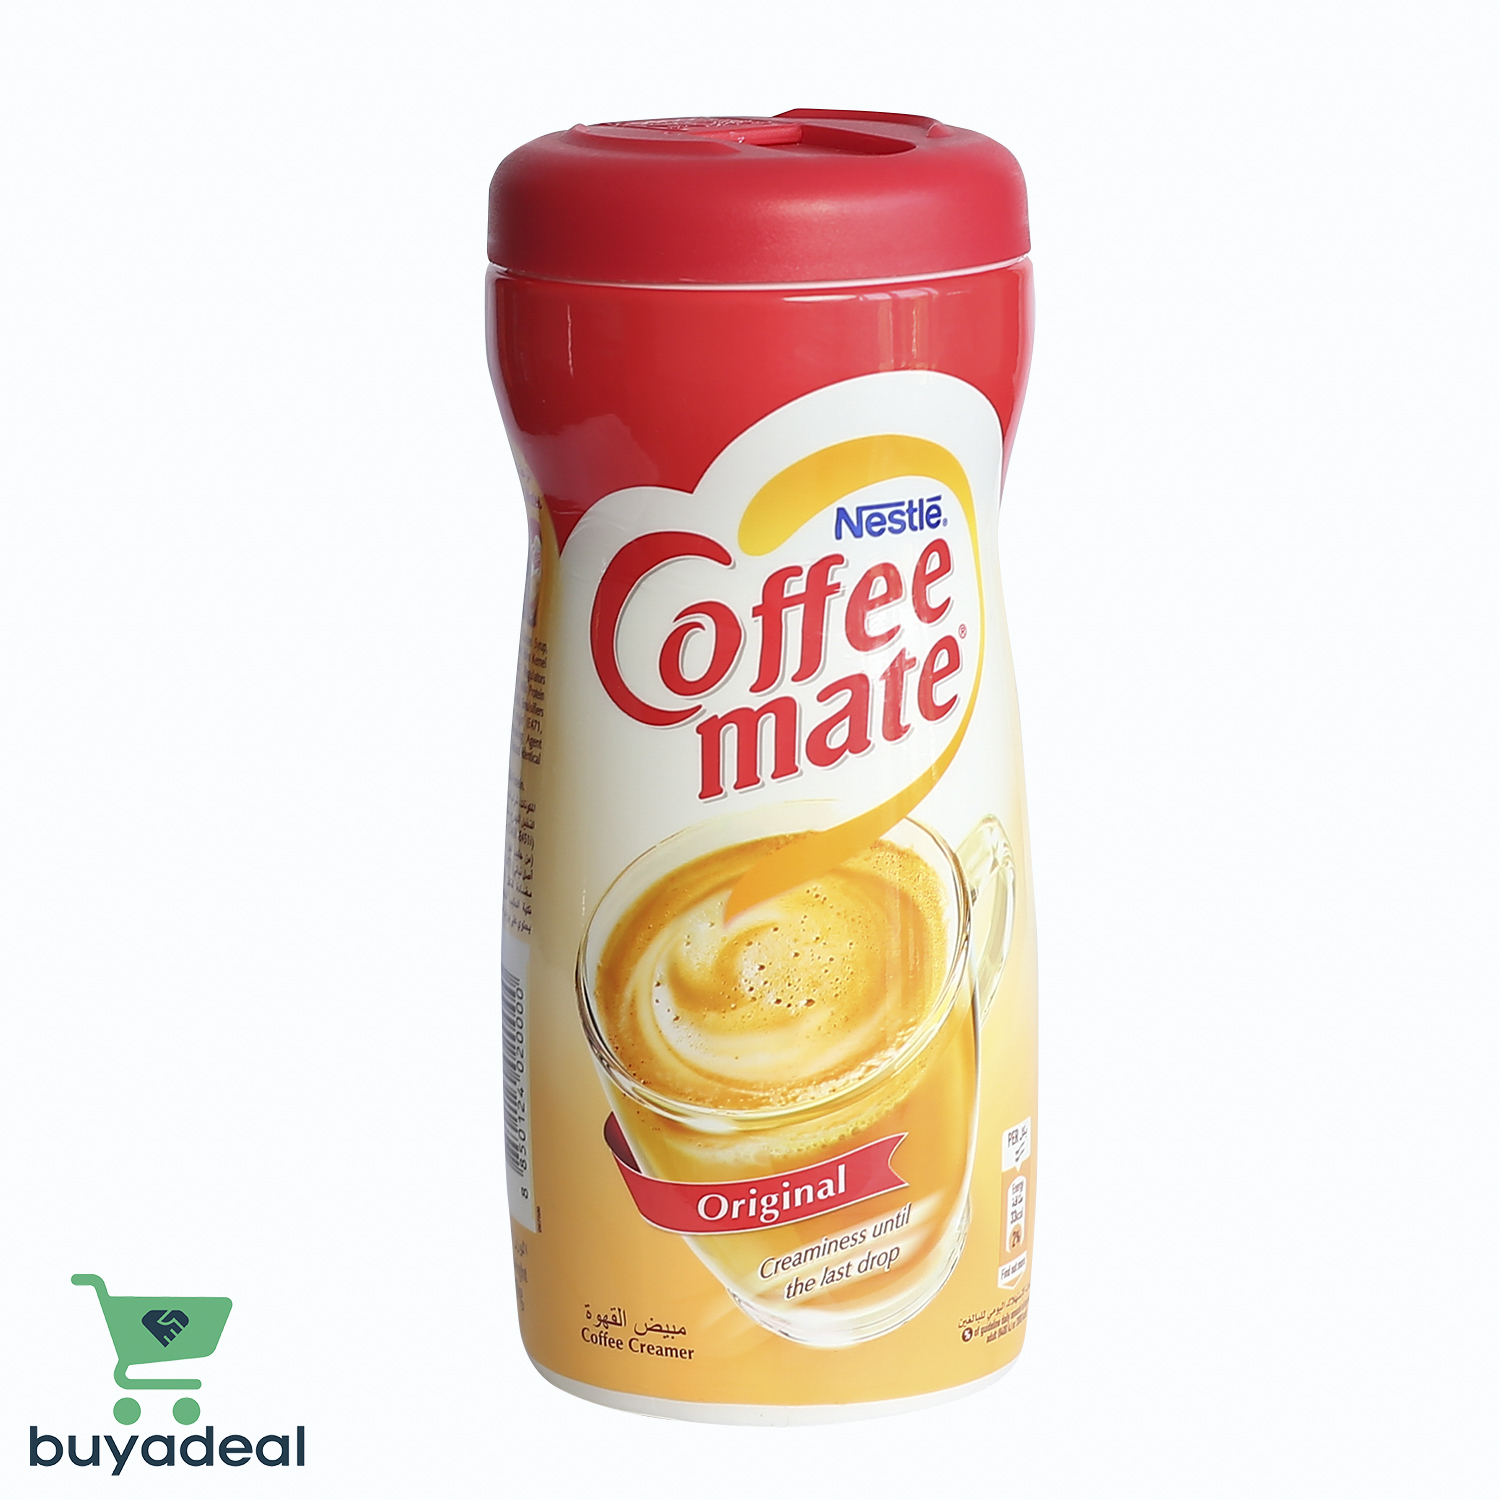 BUYADEAL productNescafe Coffee Mate 170g